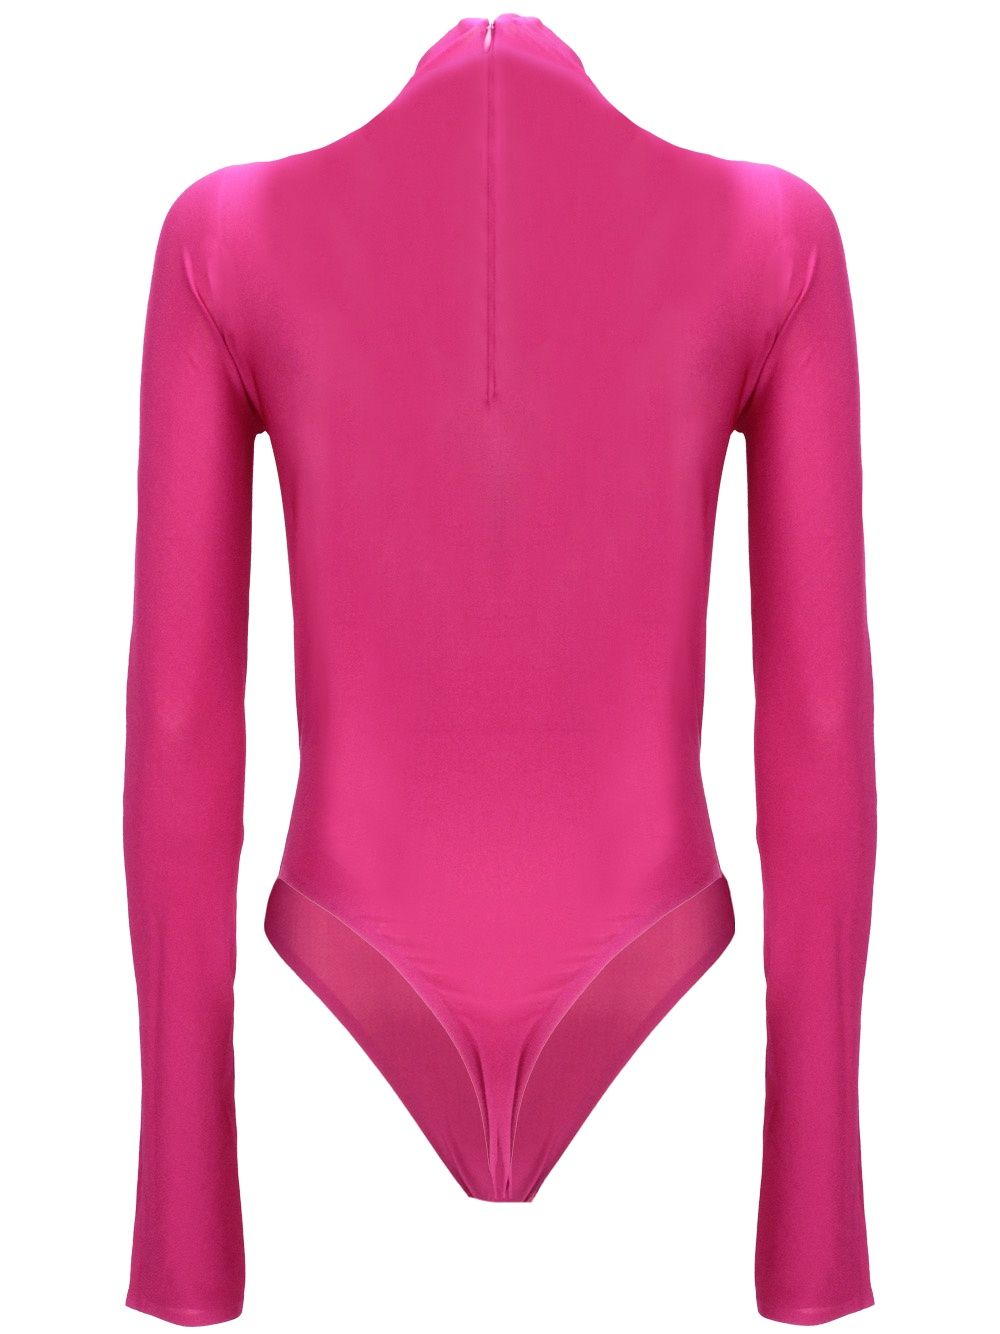 soft fuchsia pink stretch jersey